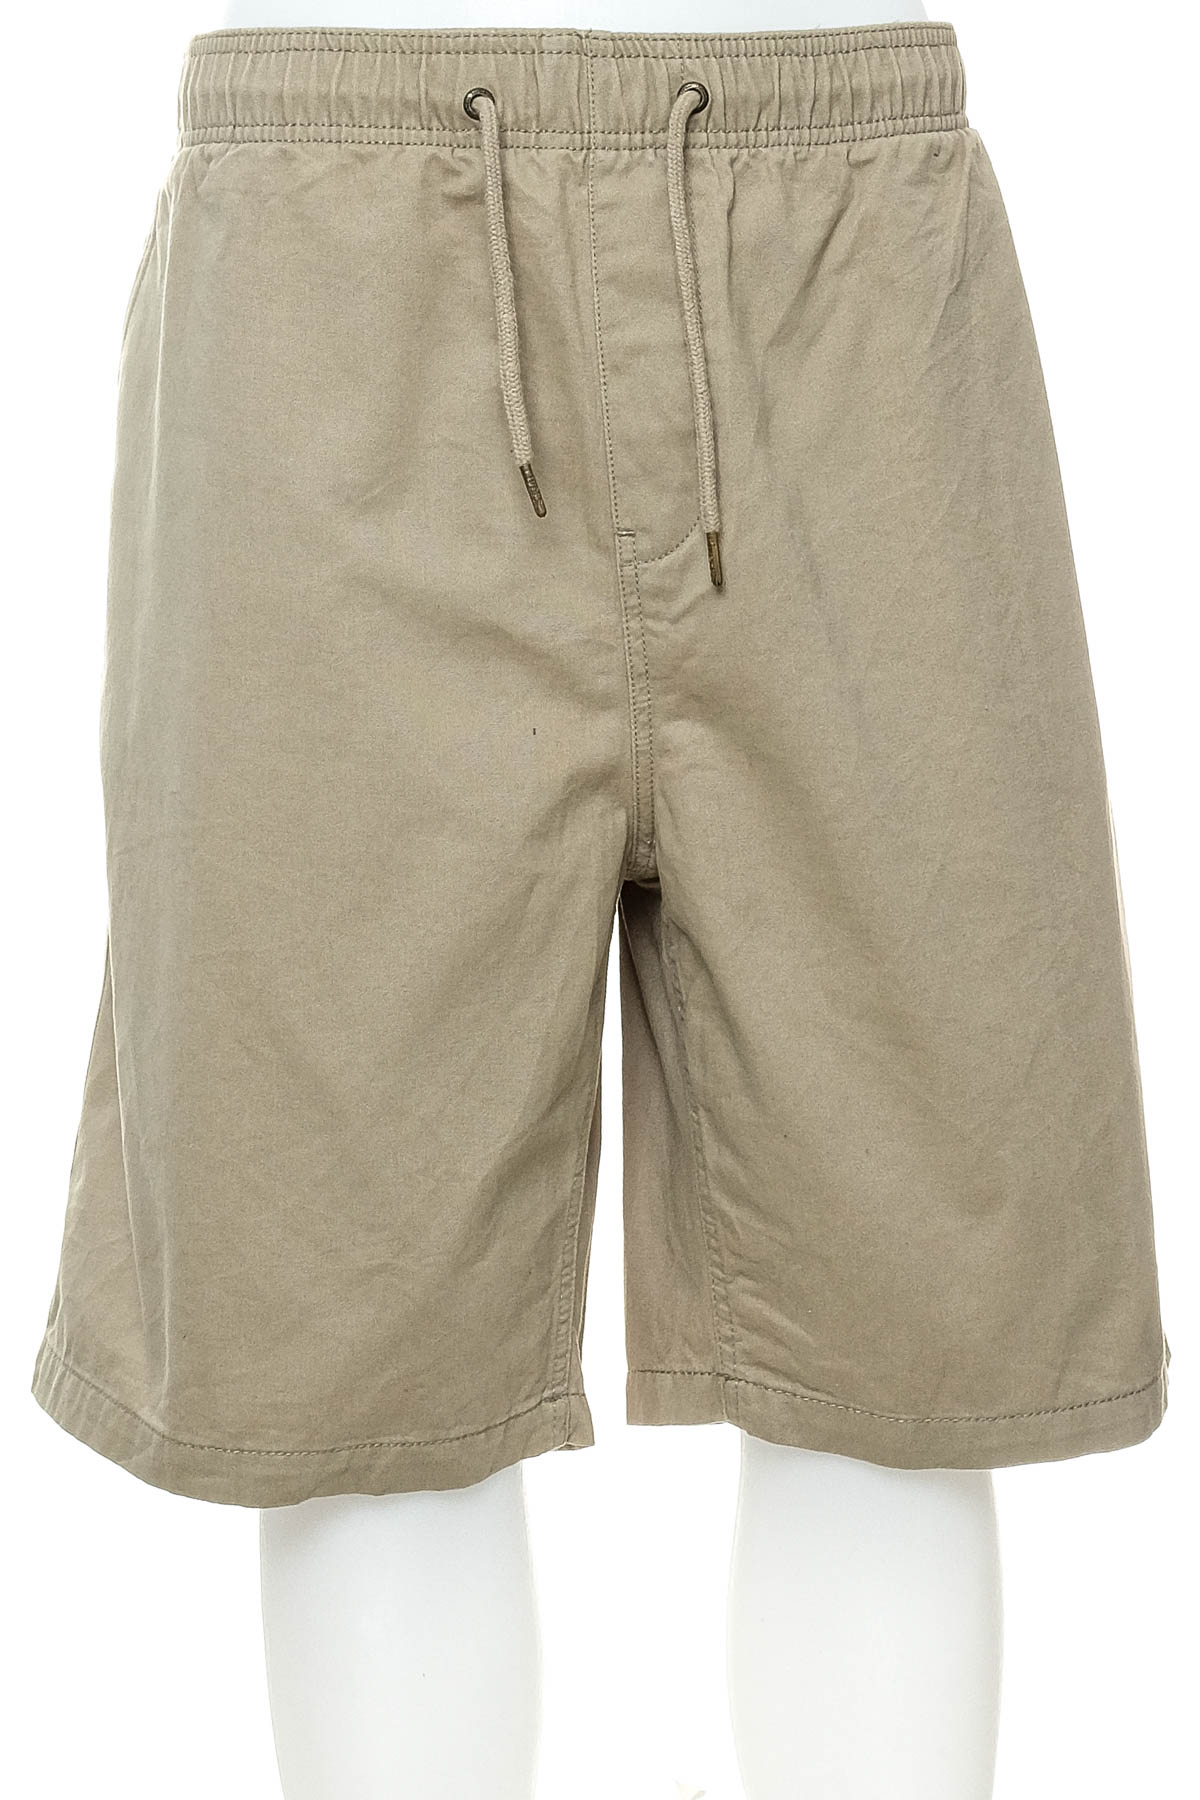 Men's shorts - Rivers - 0